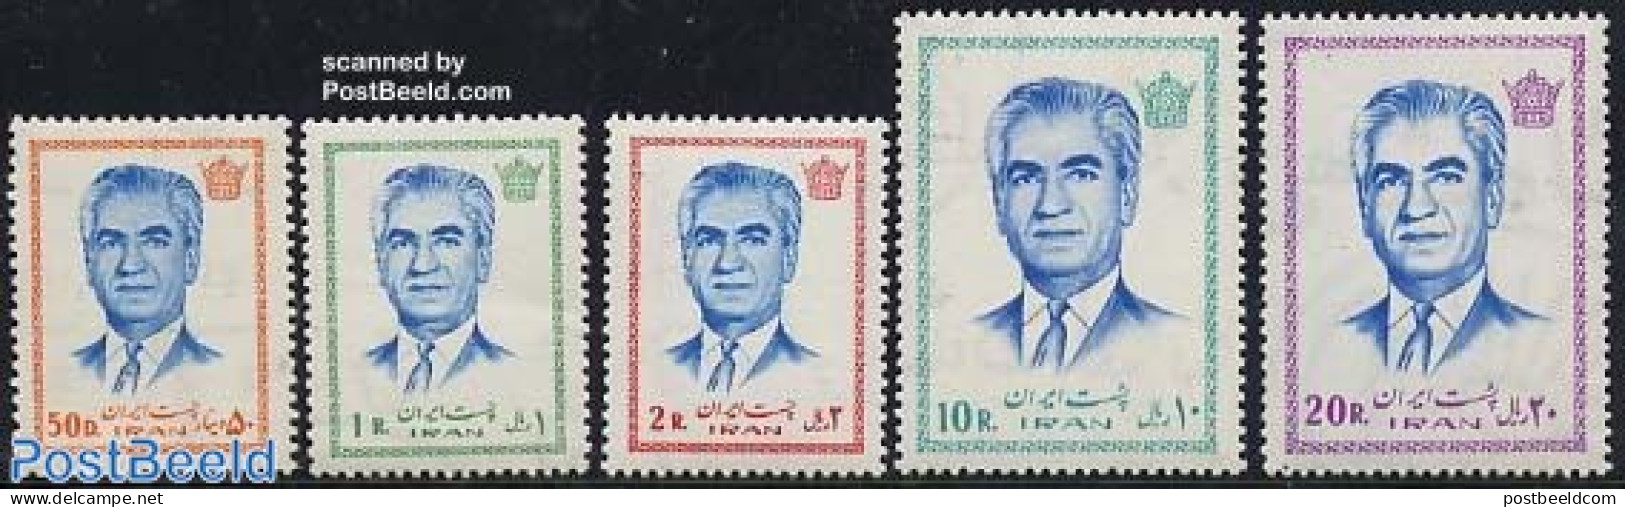 Iran/Persia 1974 Definitives 5v, Mint NH - Iran